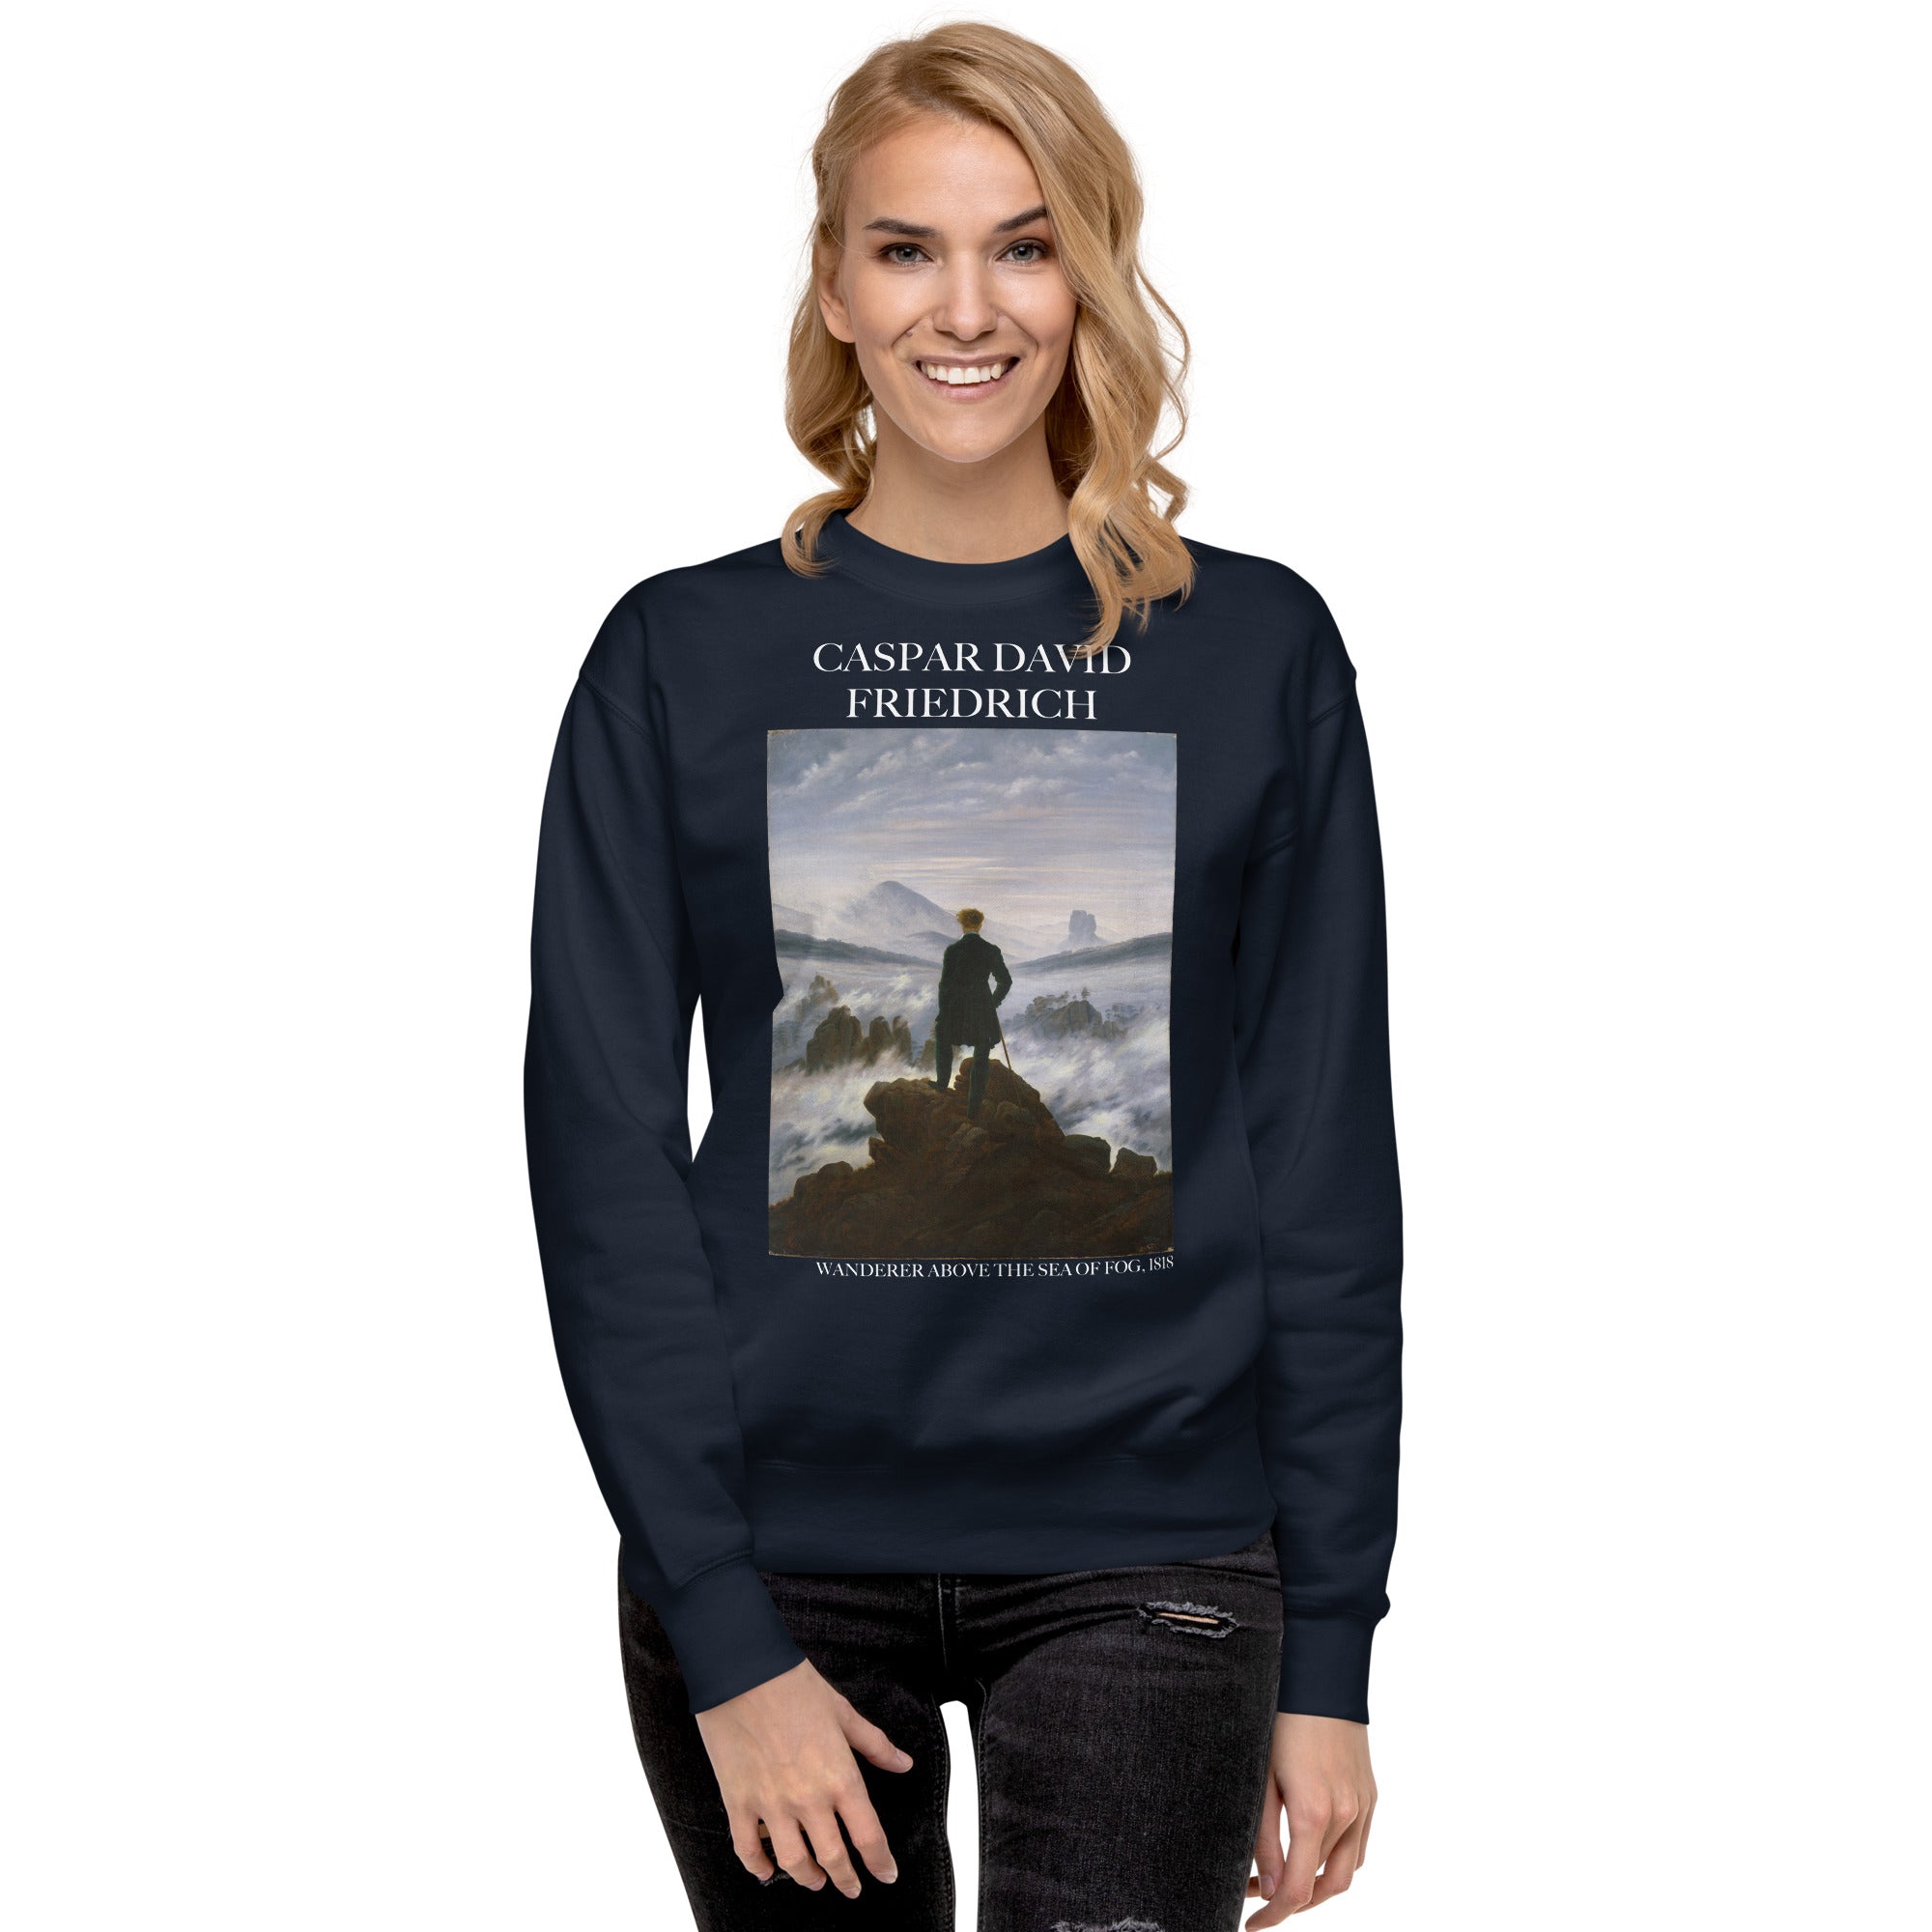 Caspar David Friedrich 'Wanderer Above the Sea of Fog' Famous Painting Sweatshirt | Unisex Premium Sweatshirt